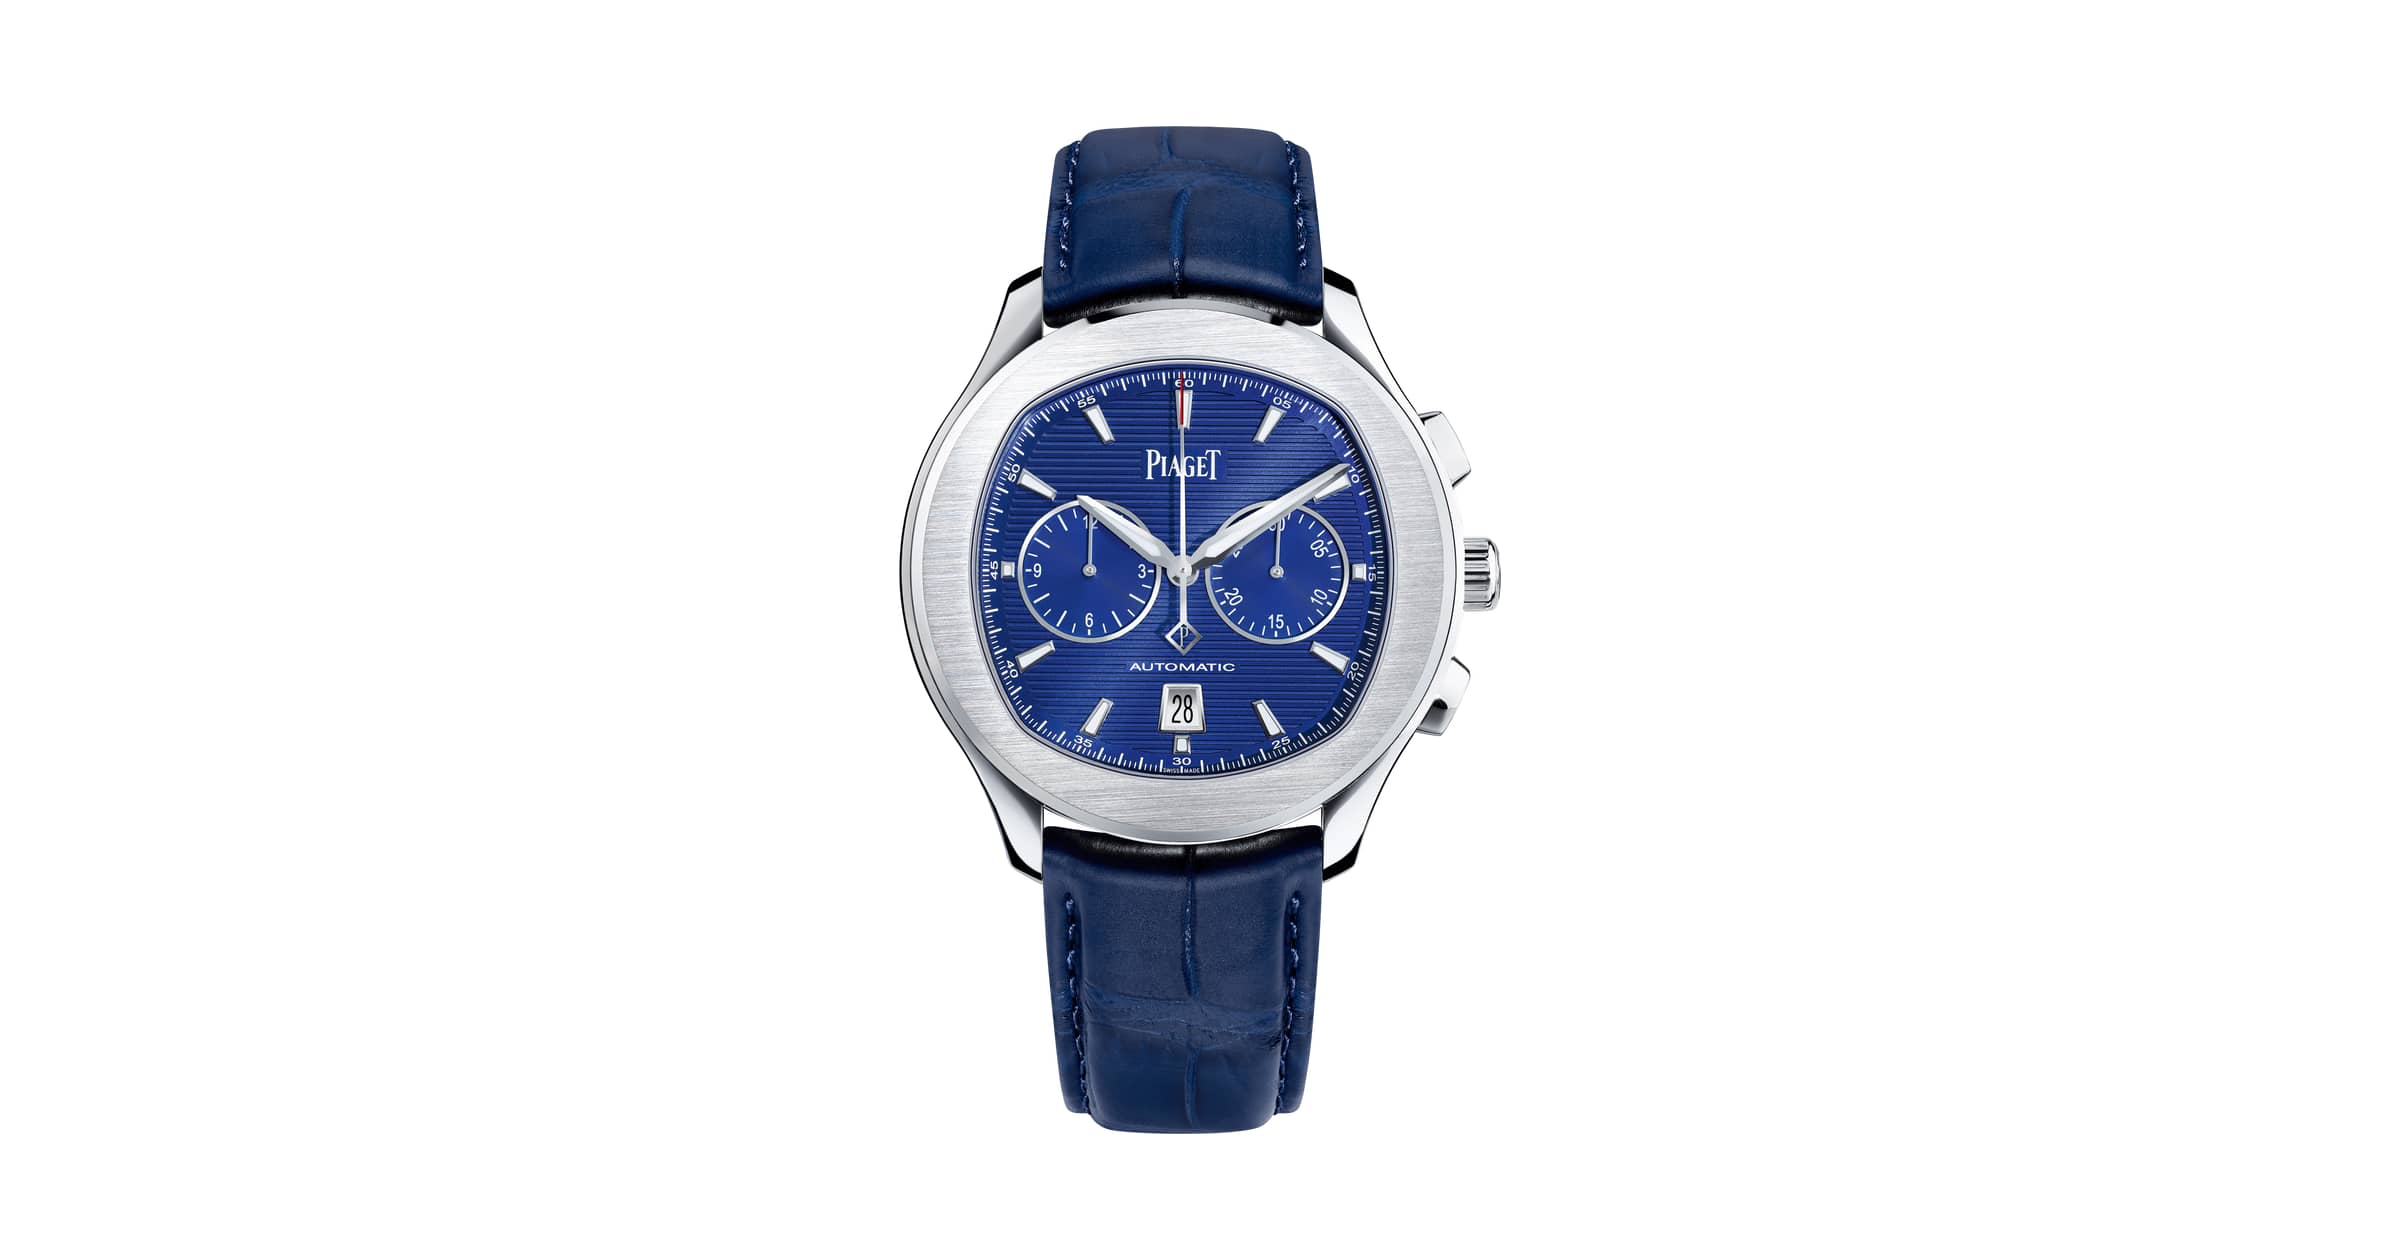 Steel Chronograph Watch - Piaget Luxury Men’s Watch G0A43002